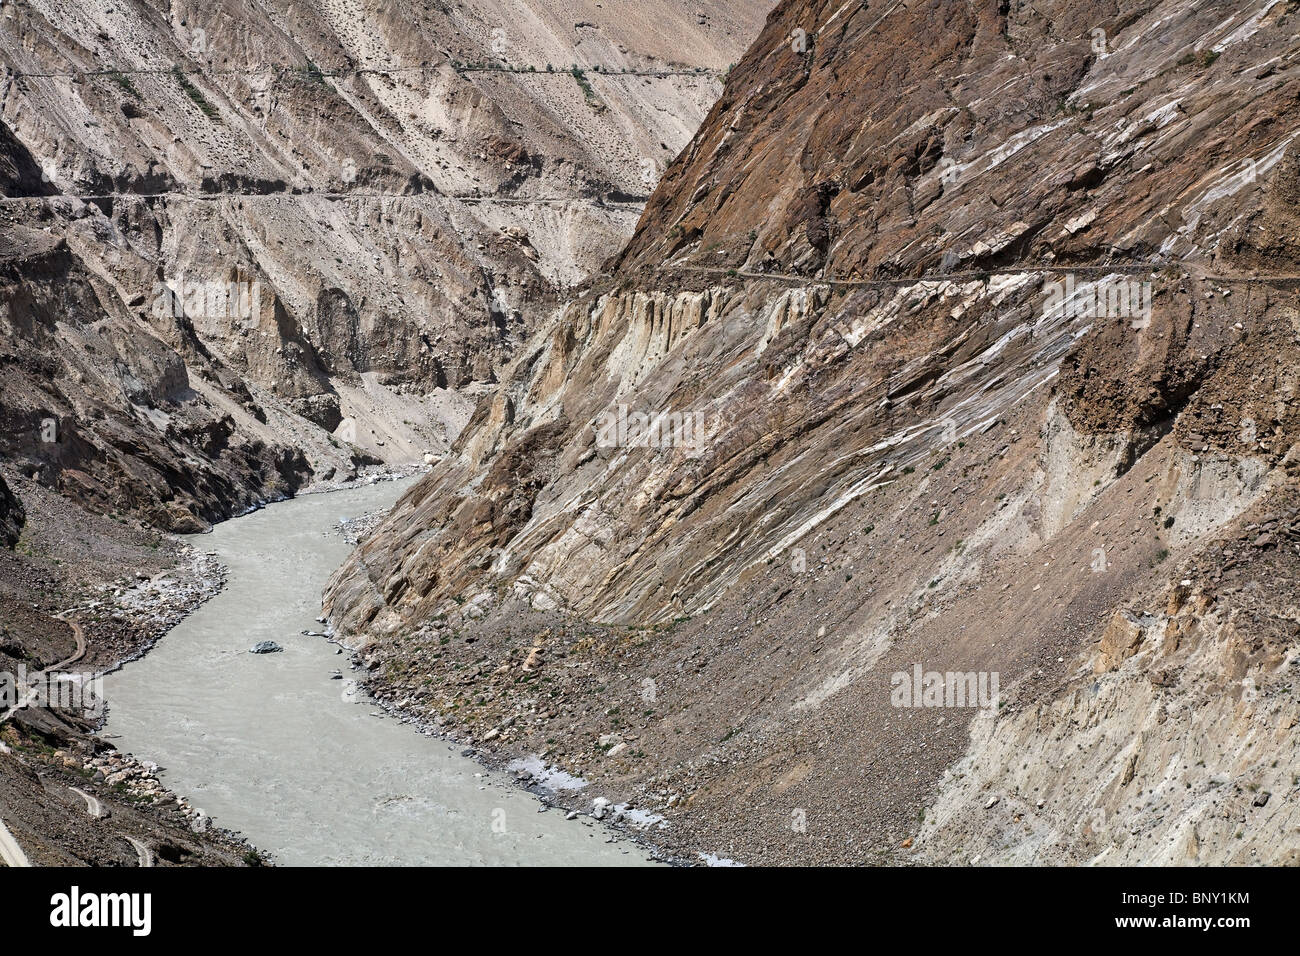 Pakistan - Hunza Valley - the Hunza river running alongside the Karakorum Highway Stock Photo